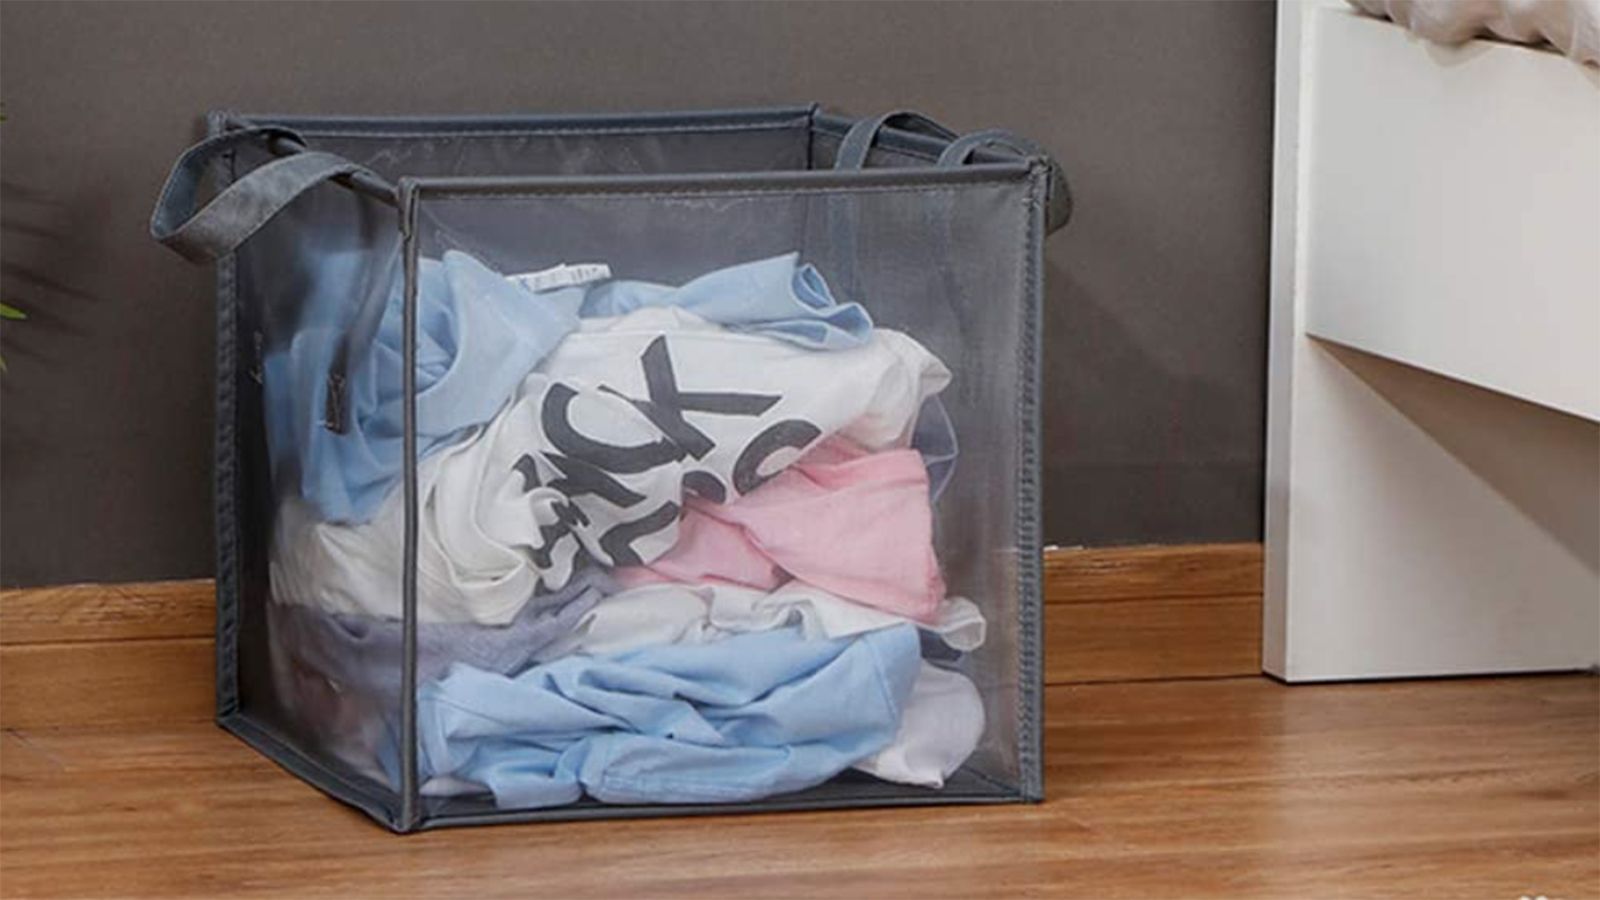 DOKEHOM 115L X-Large Laundry Basket, Collapsible Laundry Bag, Foldable Laundry Hamper, Folding Washing Bin (Beige, XL), Men's